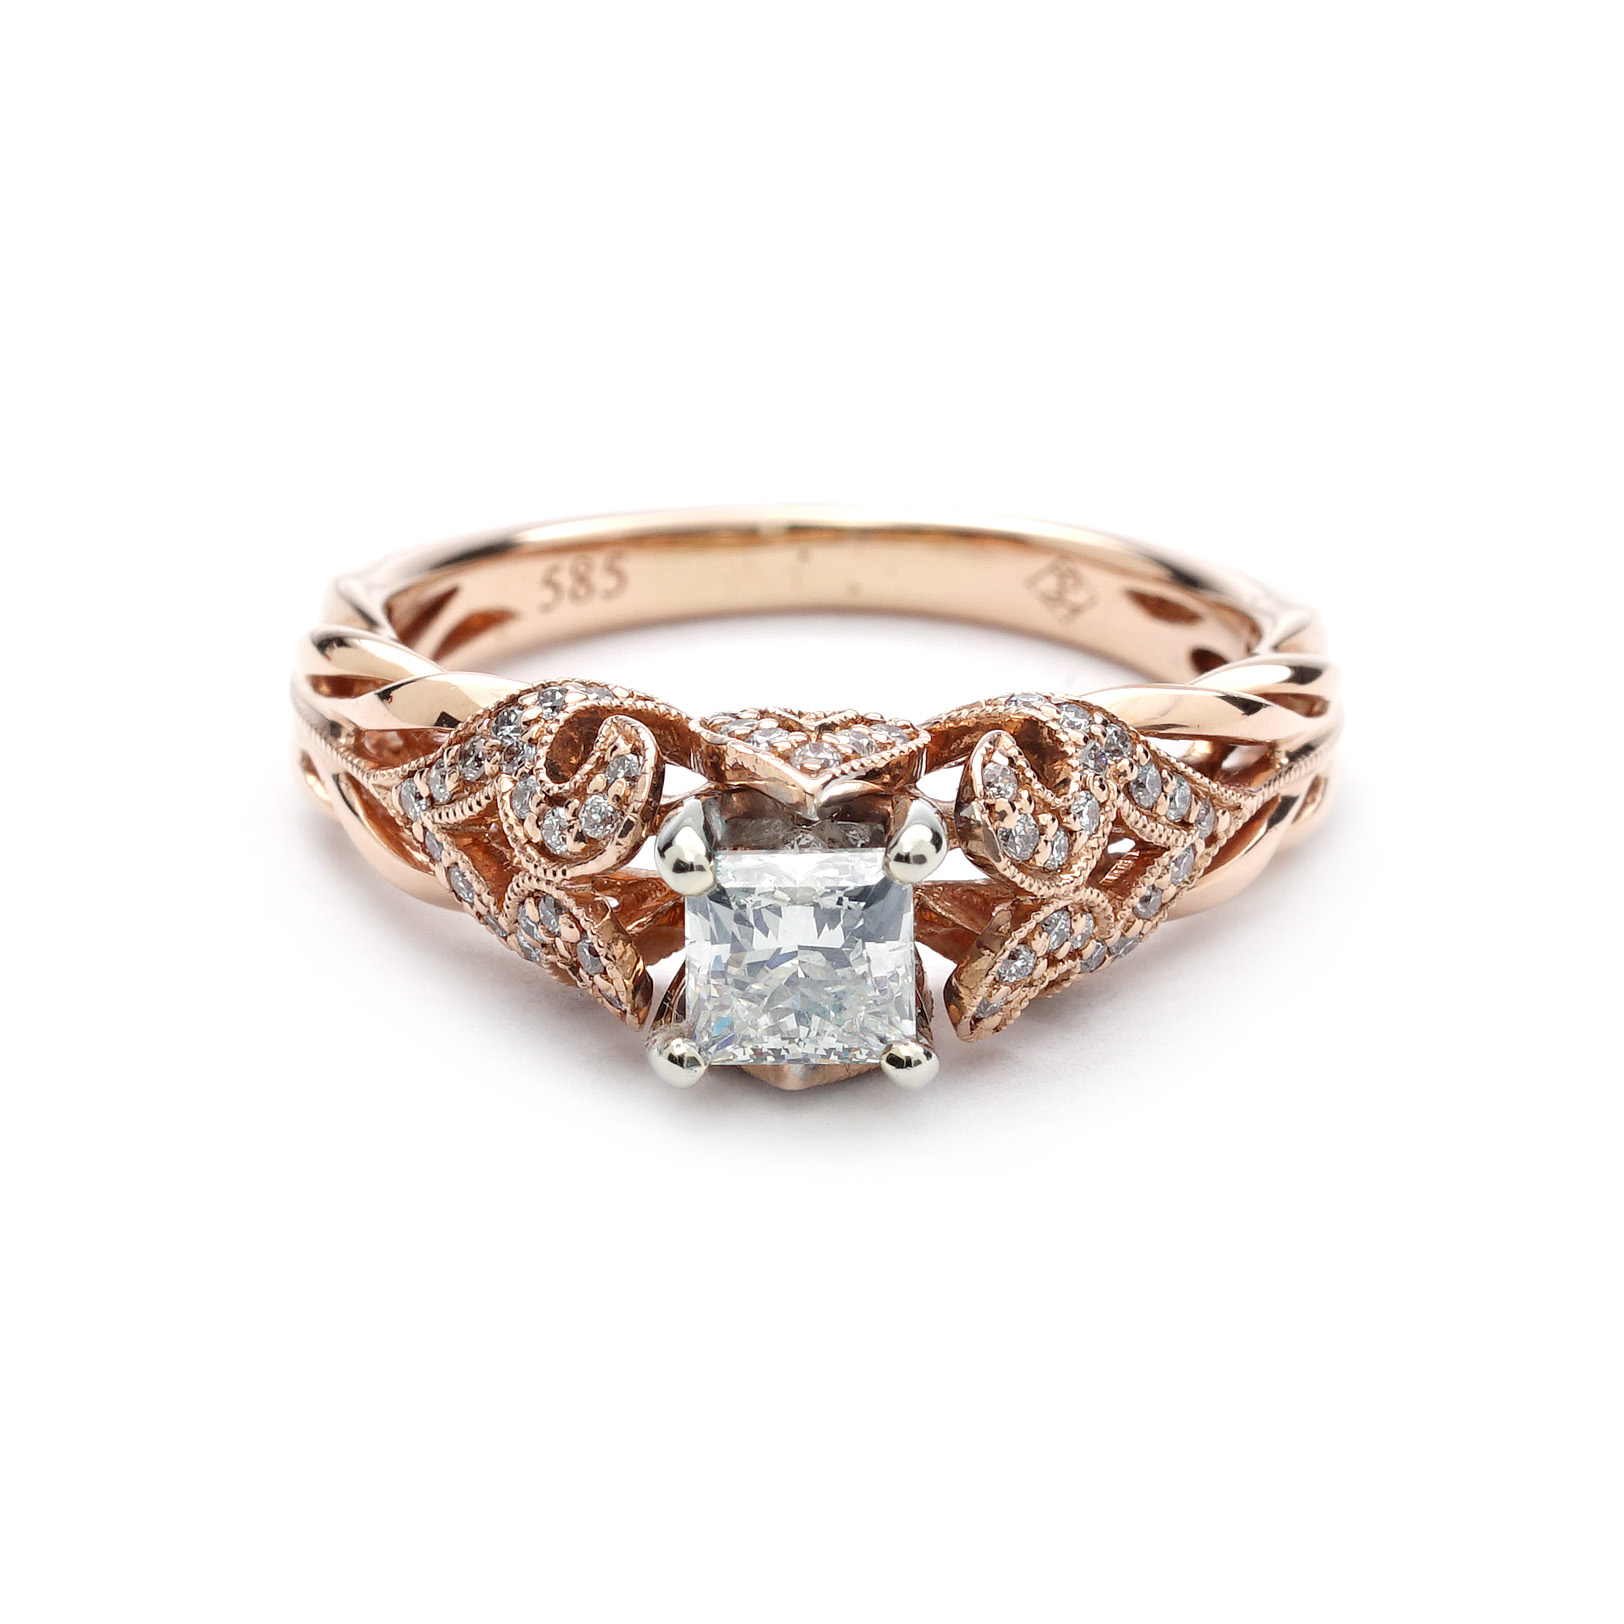 Vintage Princess Cut Engagement Rings